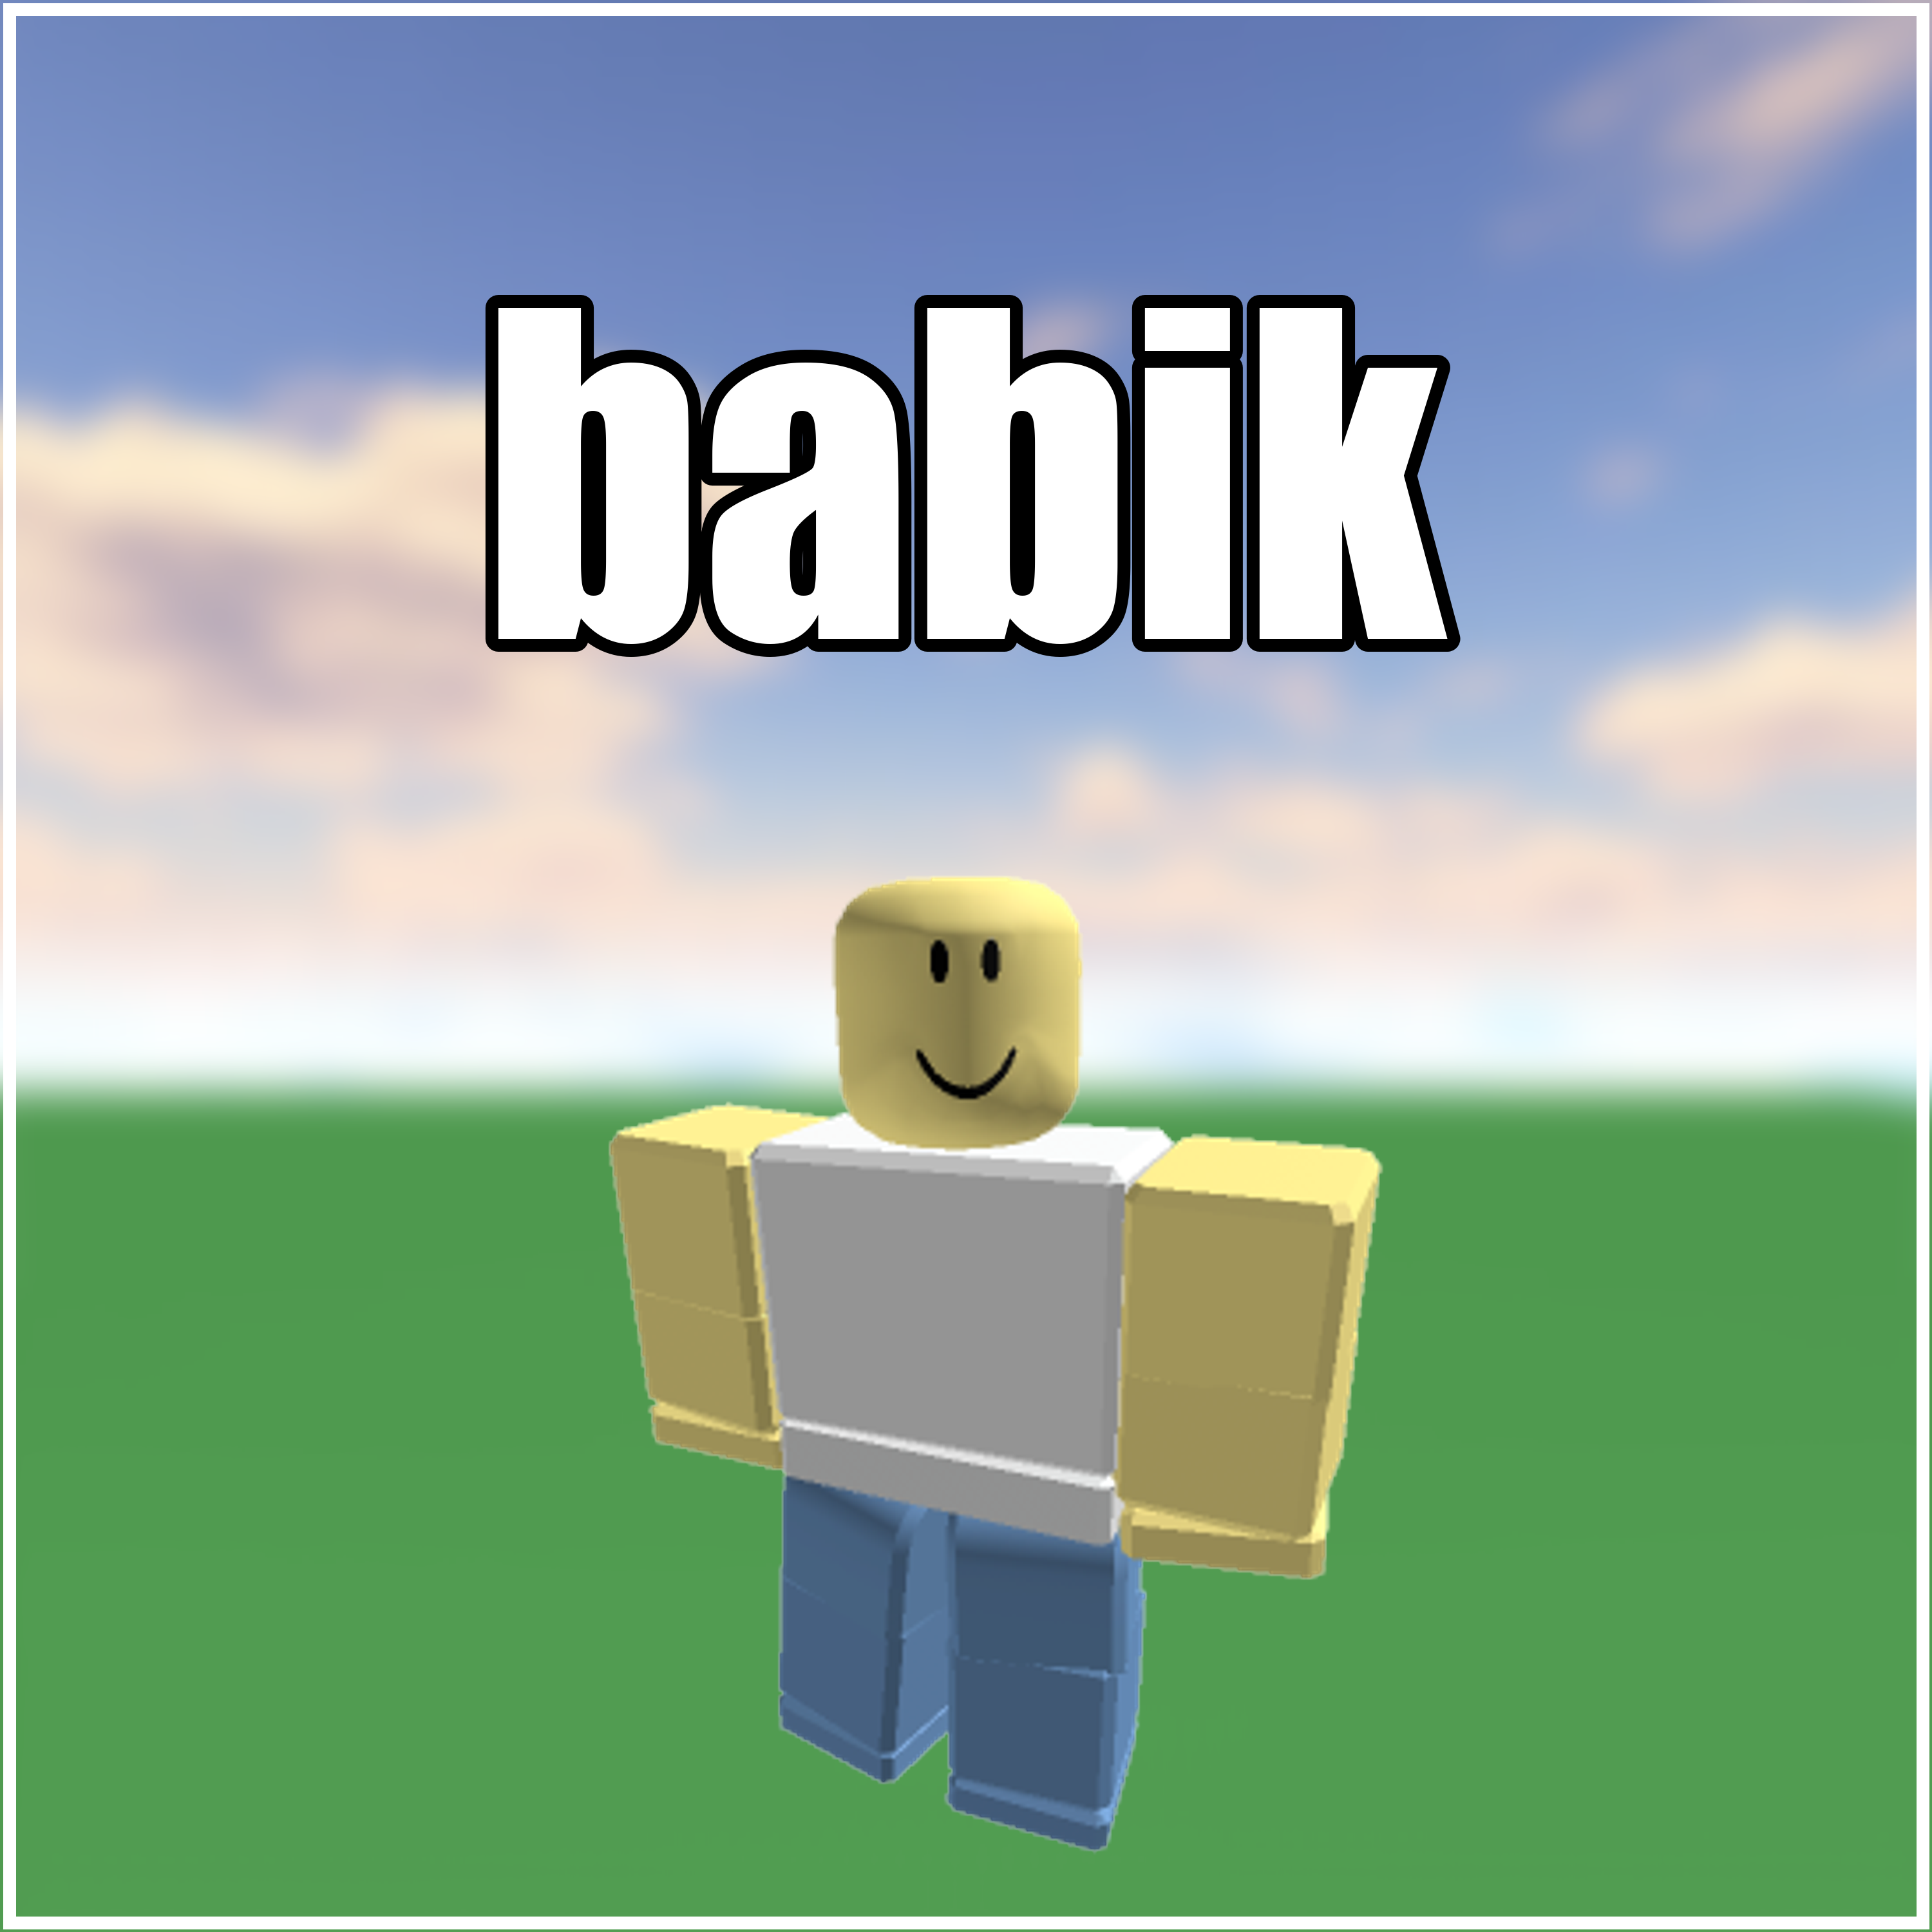 robruh RARE username "babik" ROBLOX account guaranteed to be unverified!